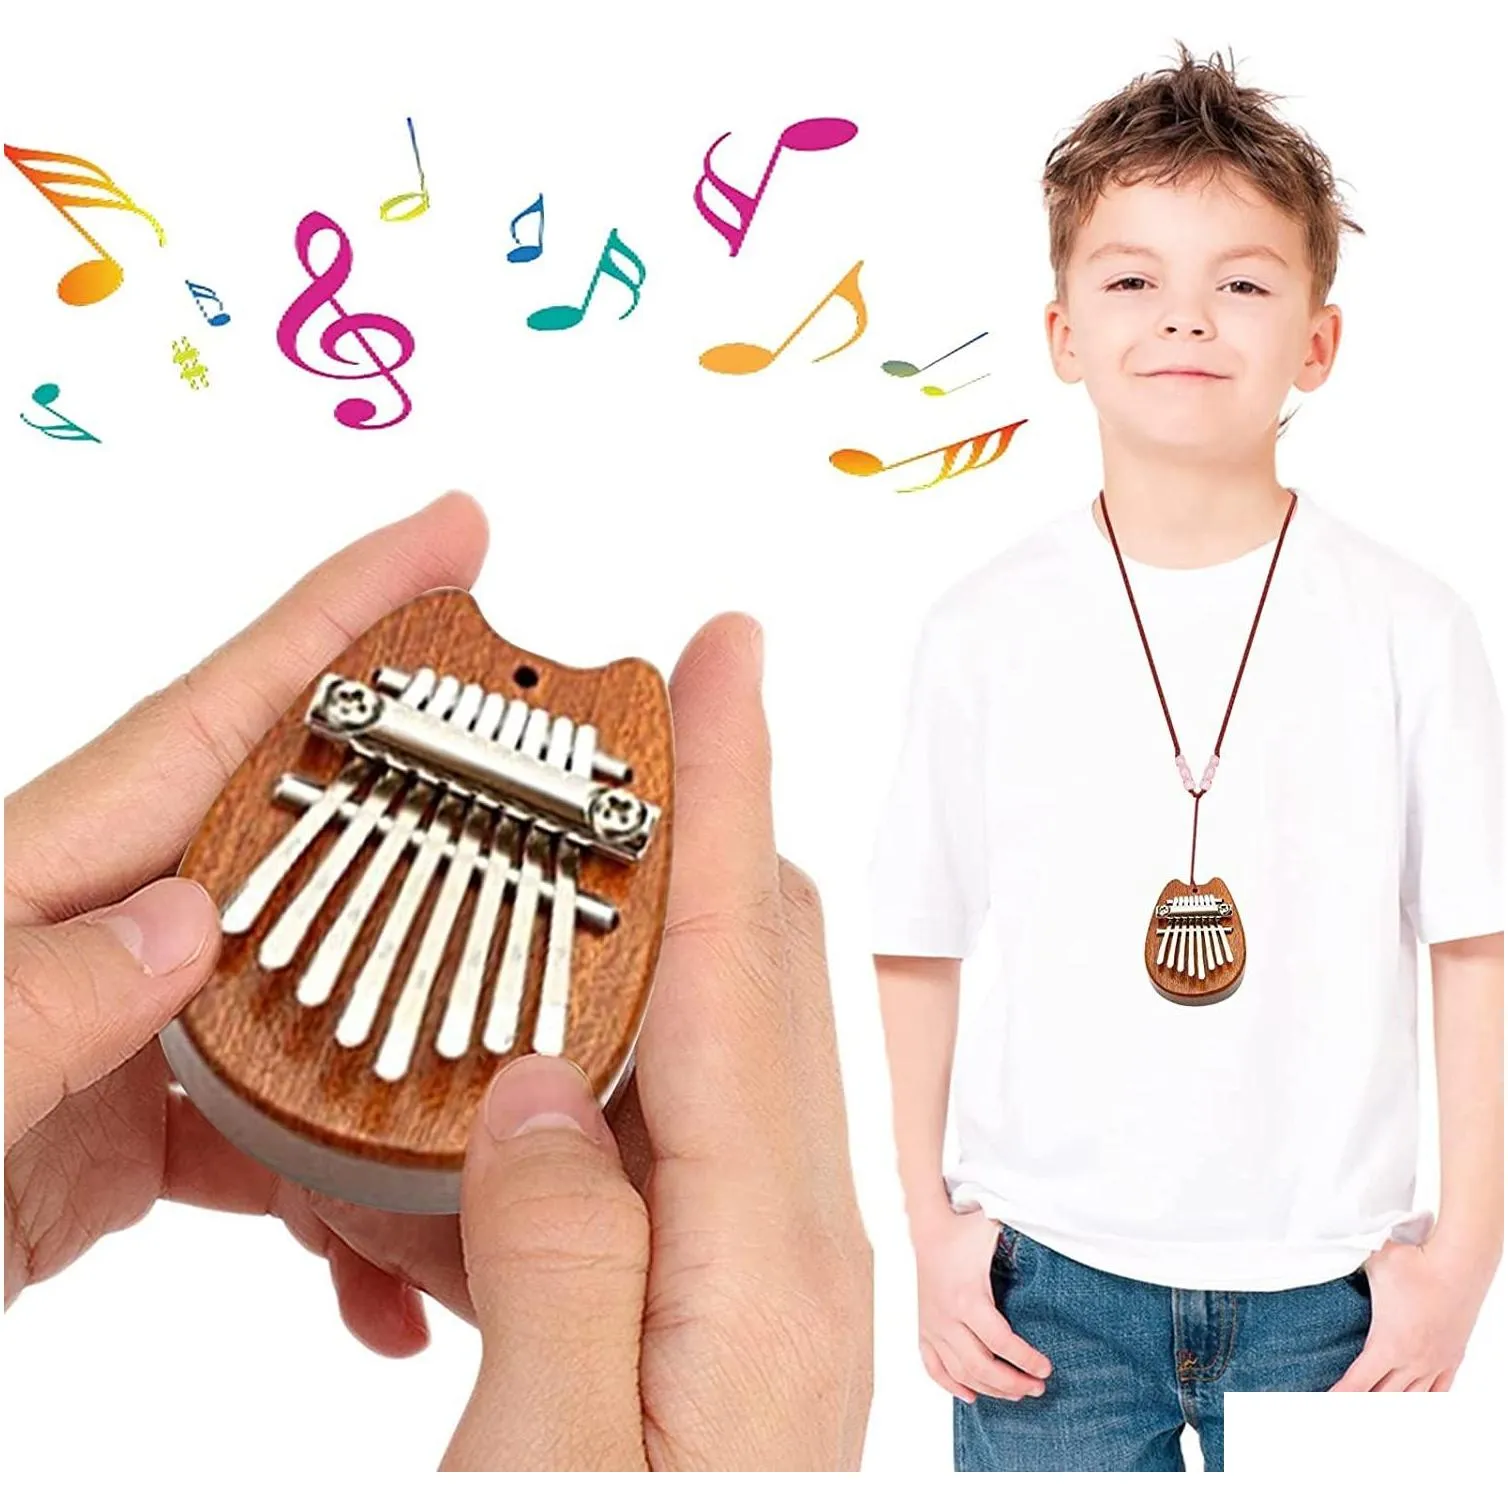 mini kalimba thumb piano portable discovery solid wood 8 keys marimba musical finger piano for kids adults beginners